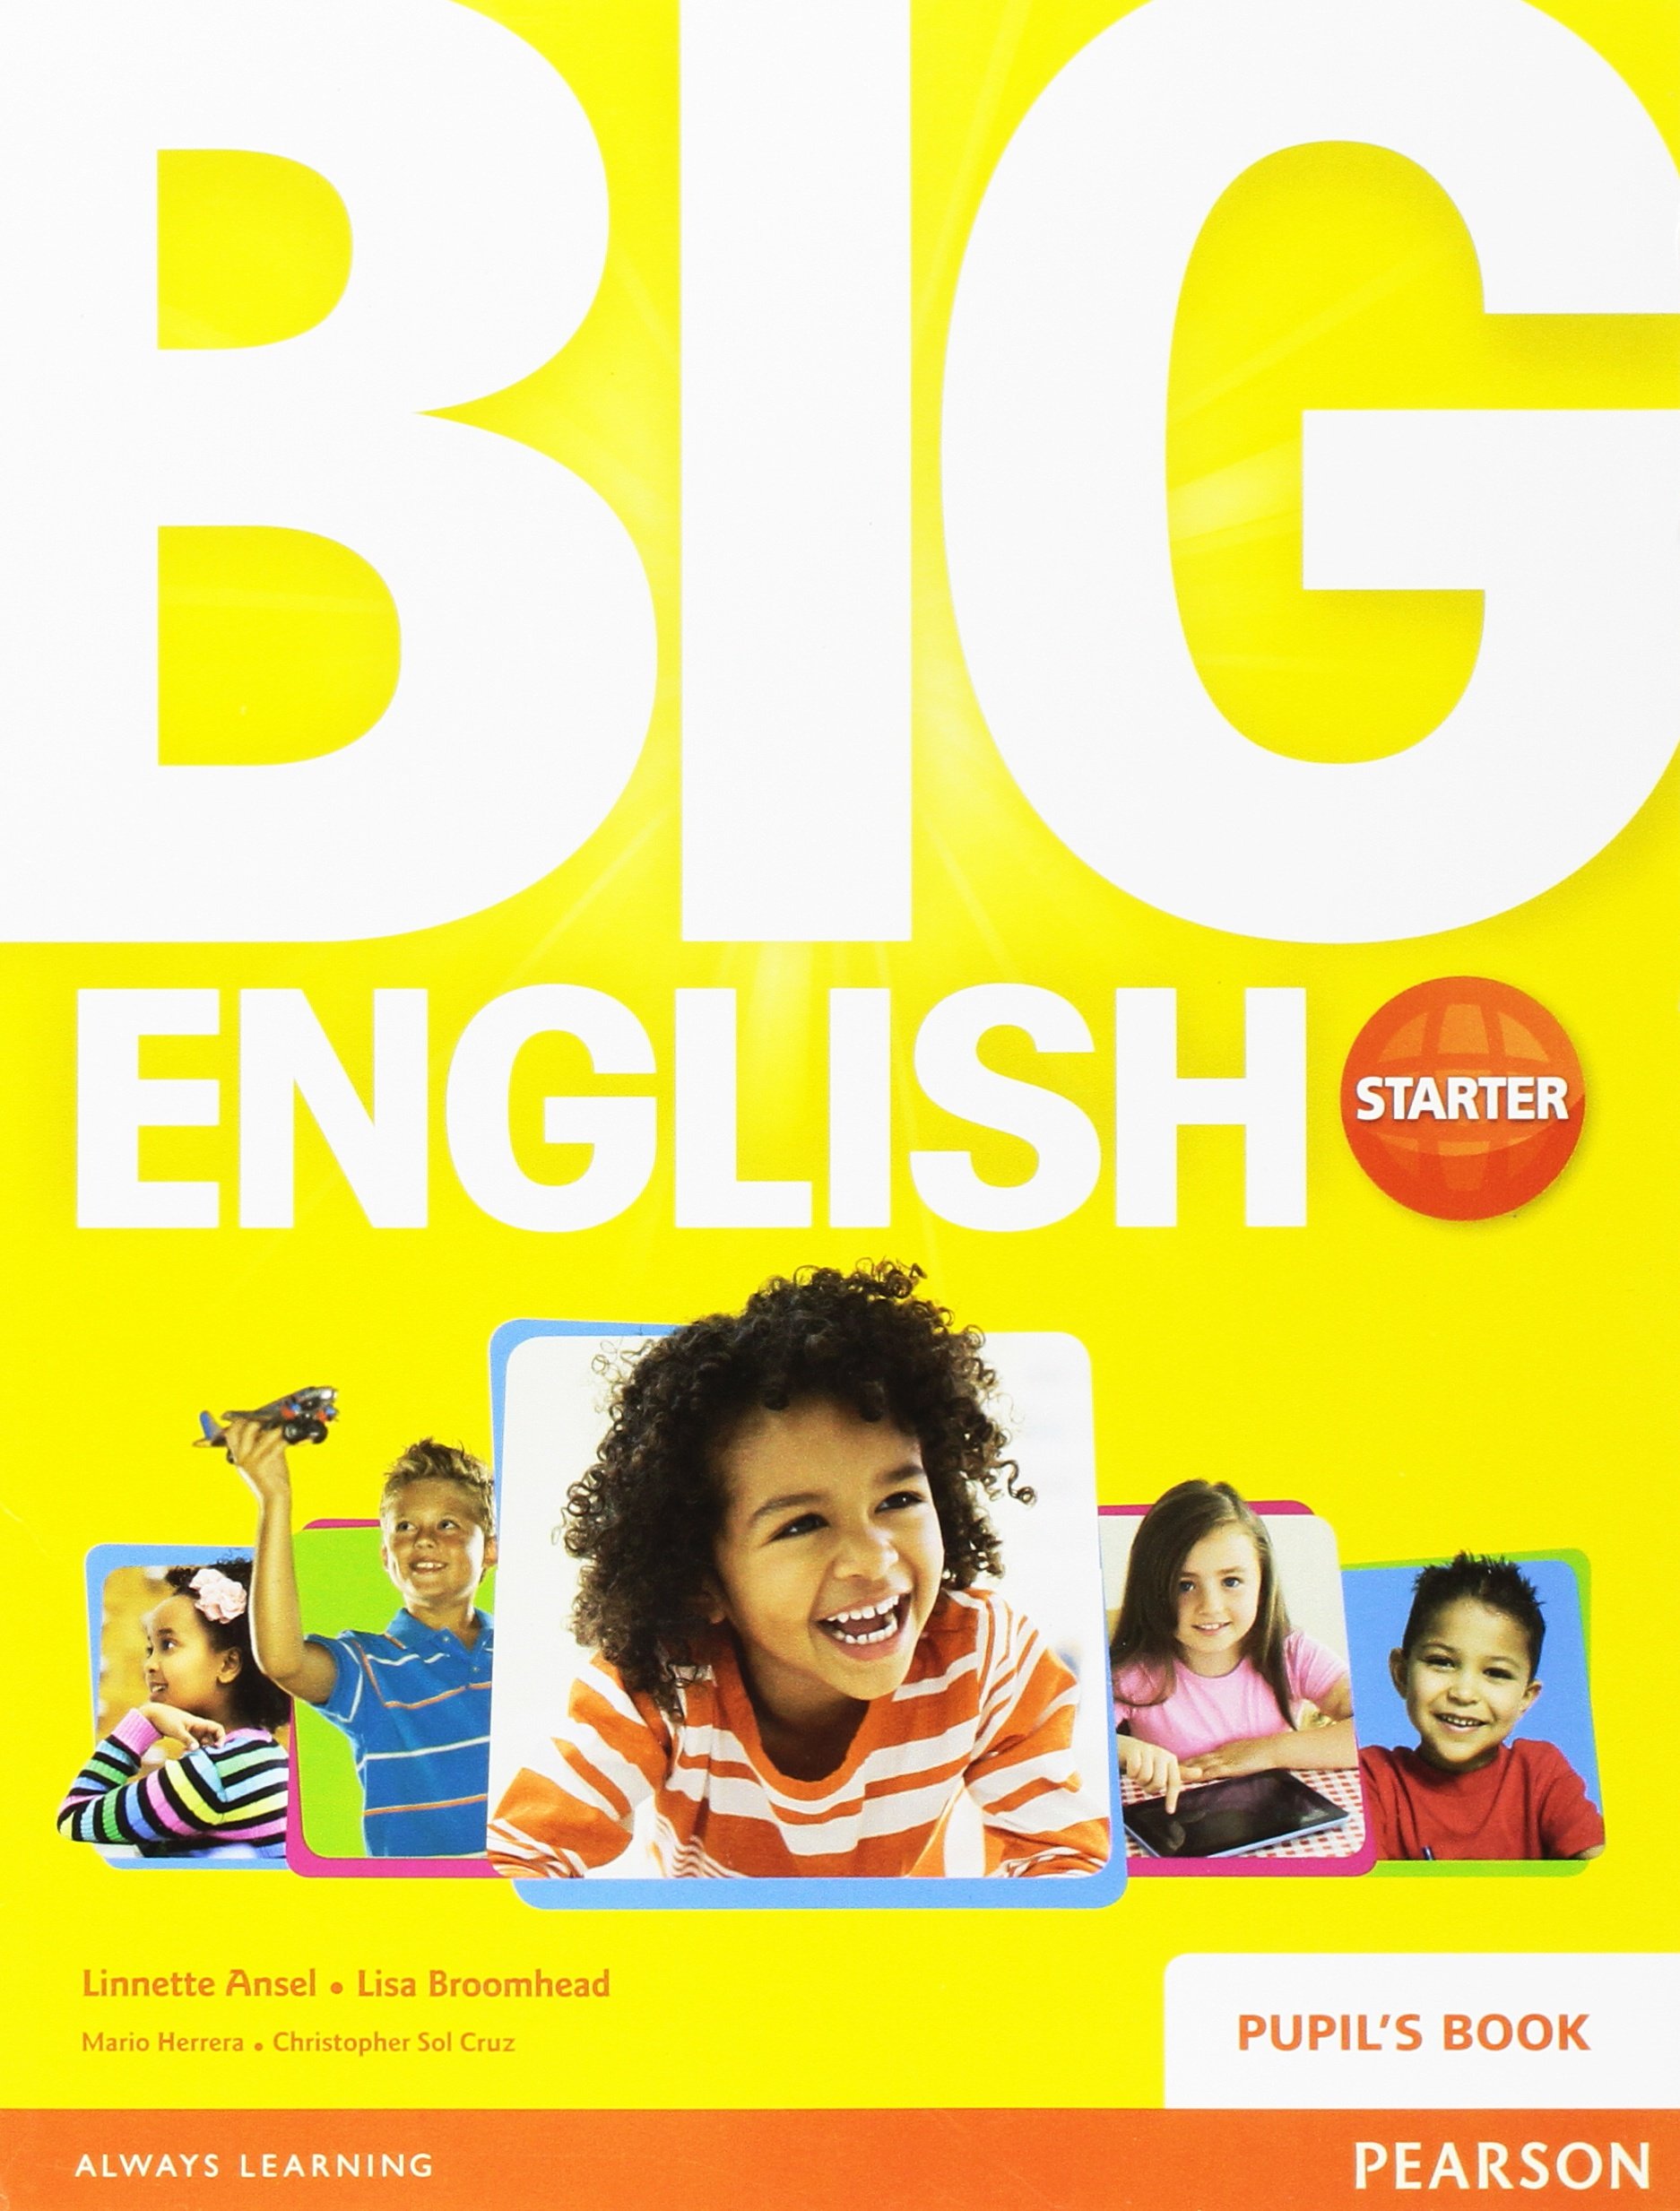 BIG ENGLISH STARTER Pupil's Book